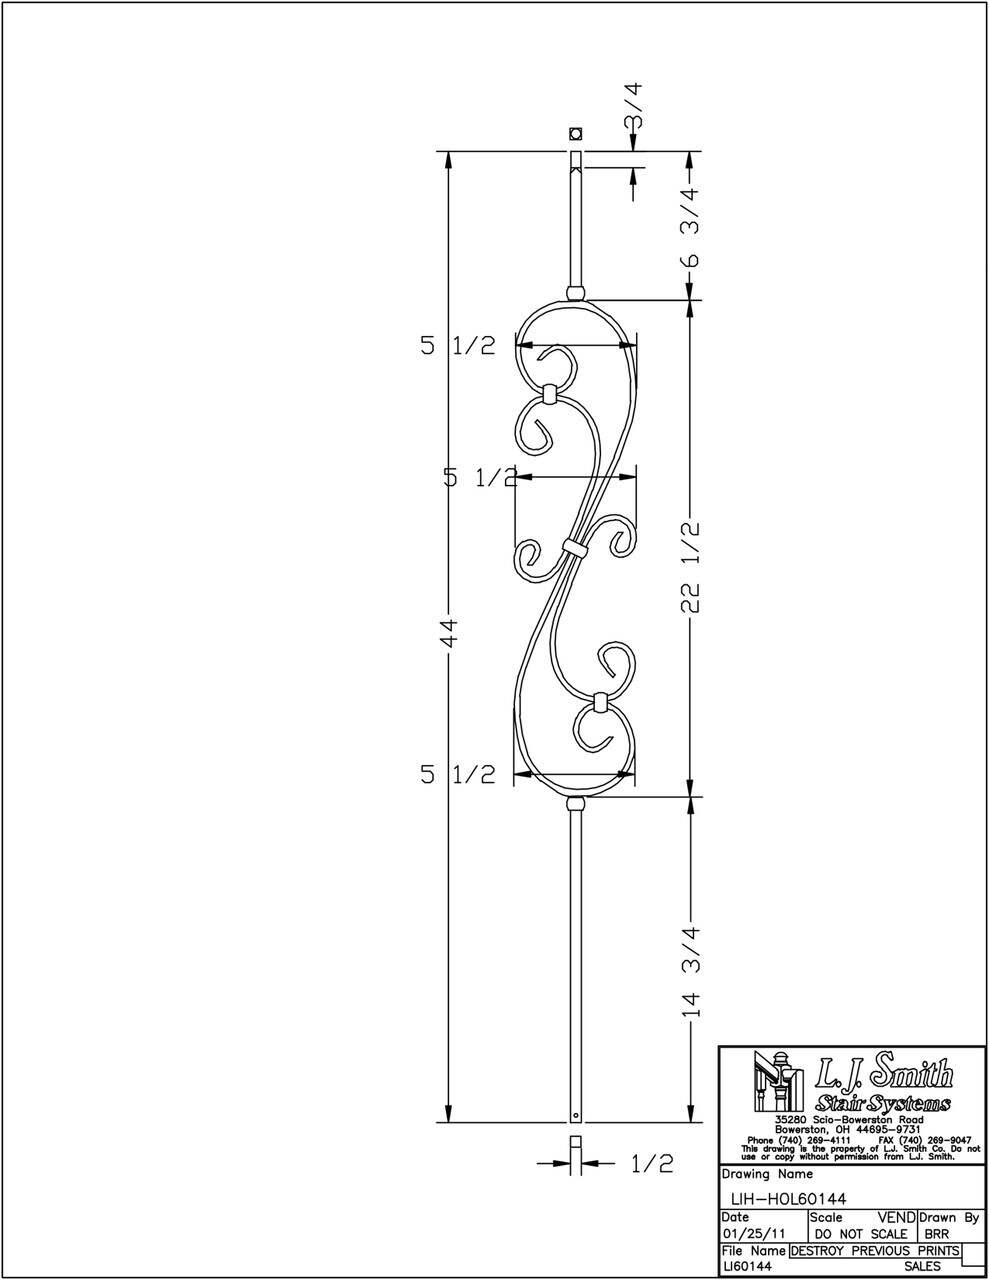 LIH-HOL60144 — Skinny Scroll 44" Iron Baluster (1/2" Square Hollow)